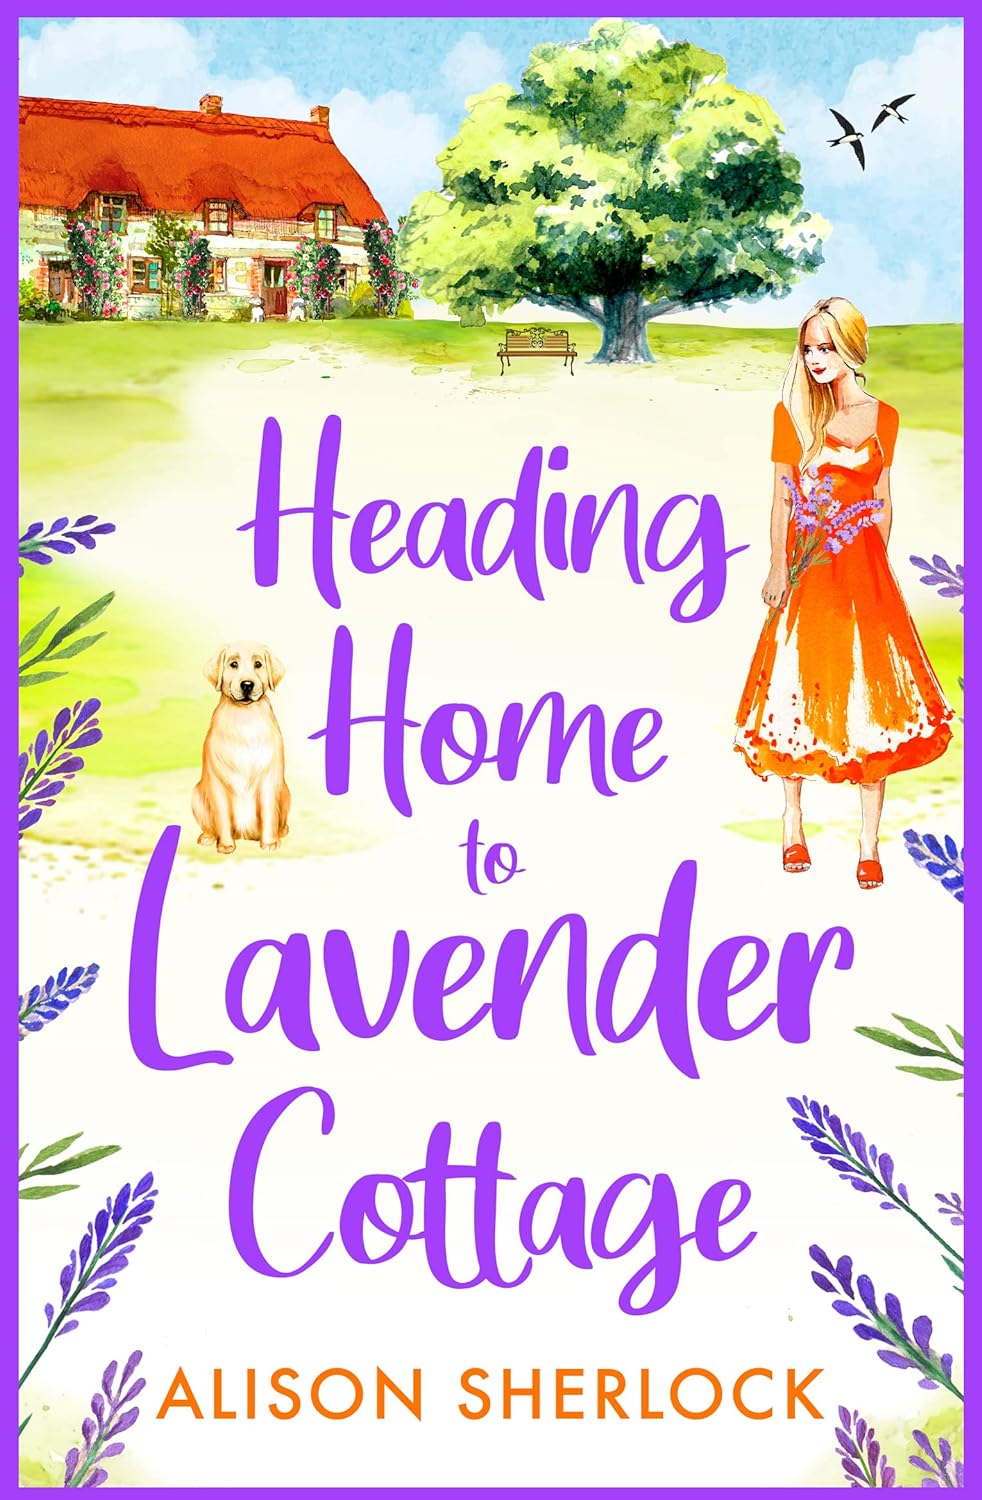 Heading Home to Lavender Cottag - Alison Sherlock